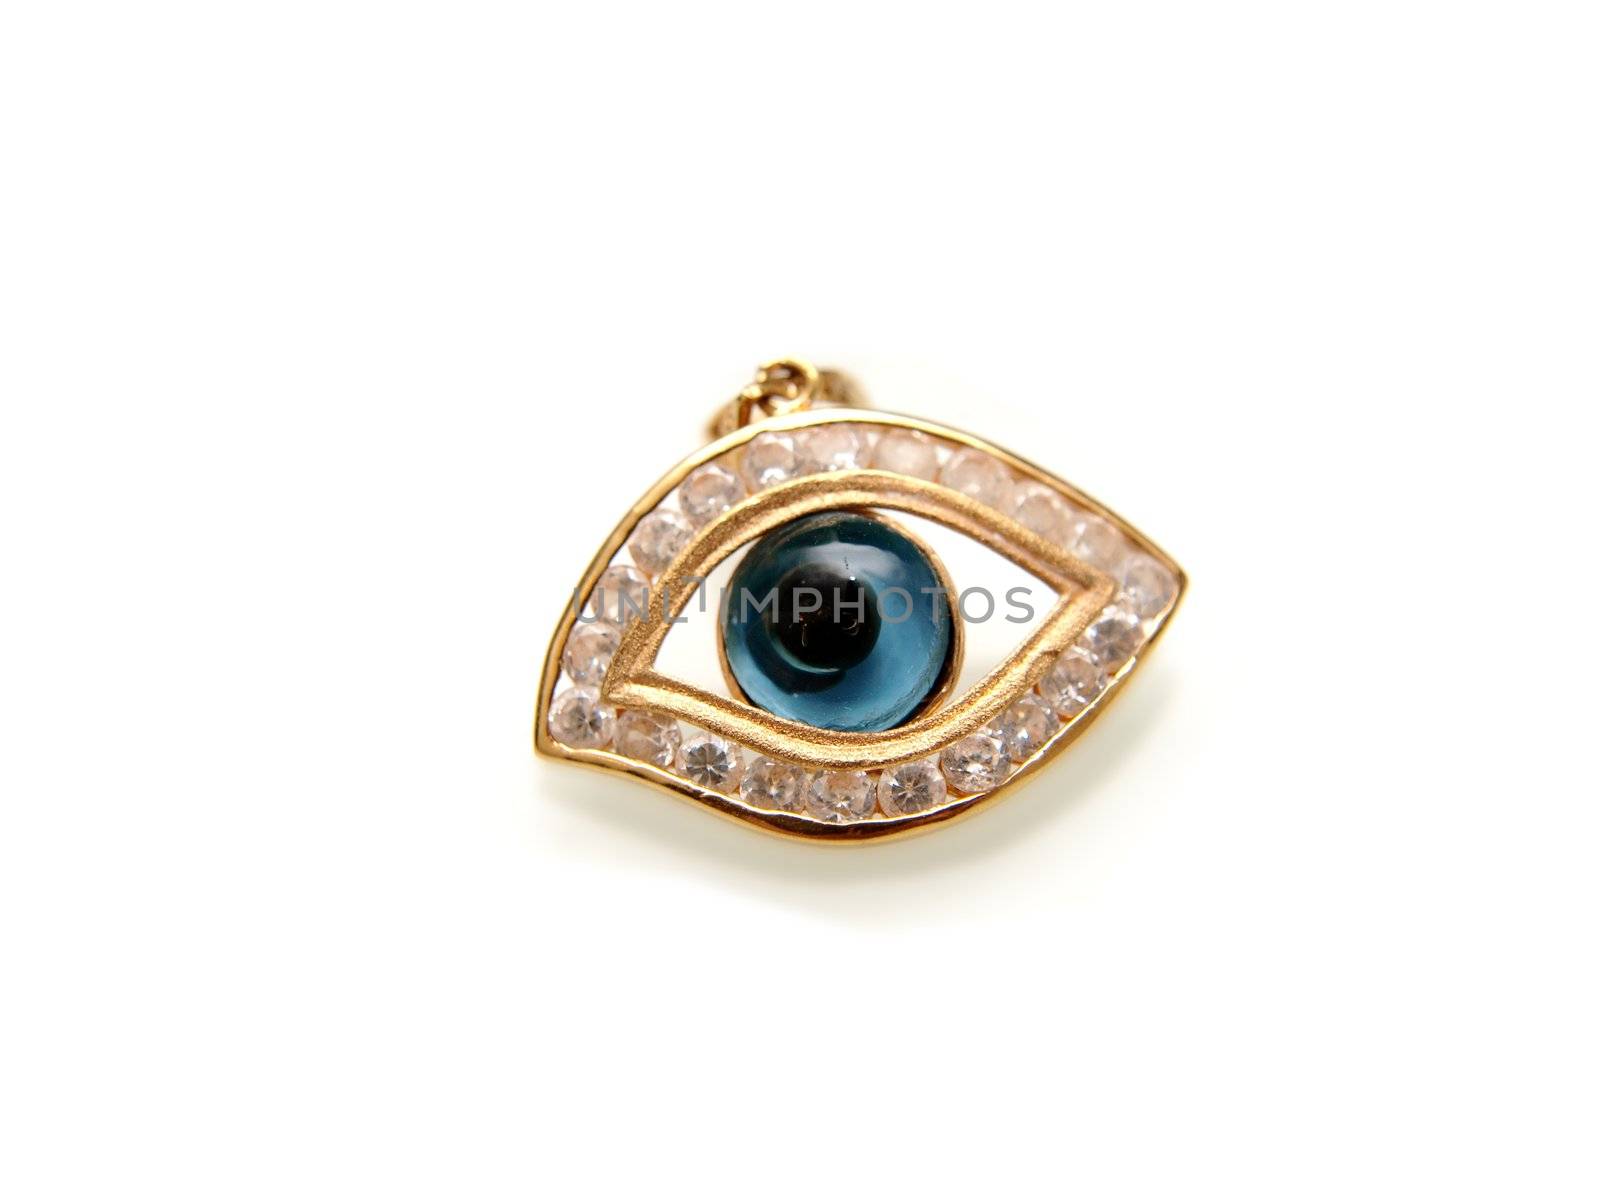 Blue evil eye, with diamonds by Arvebettum